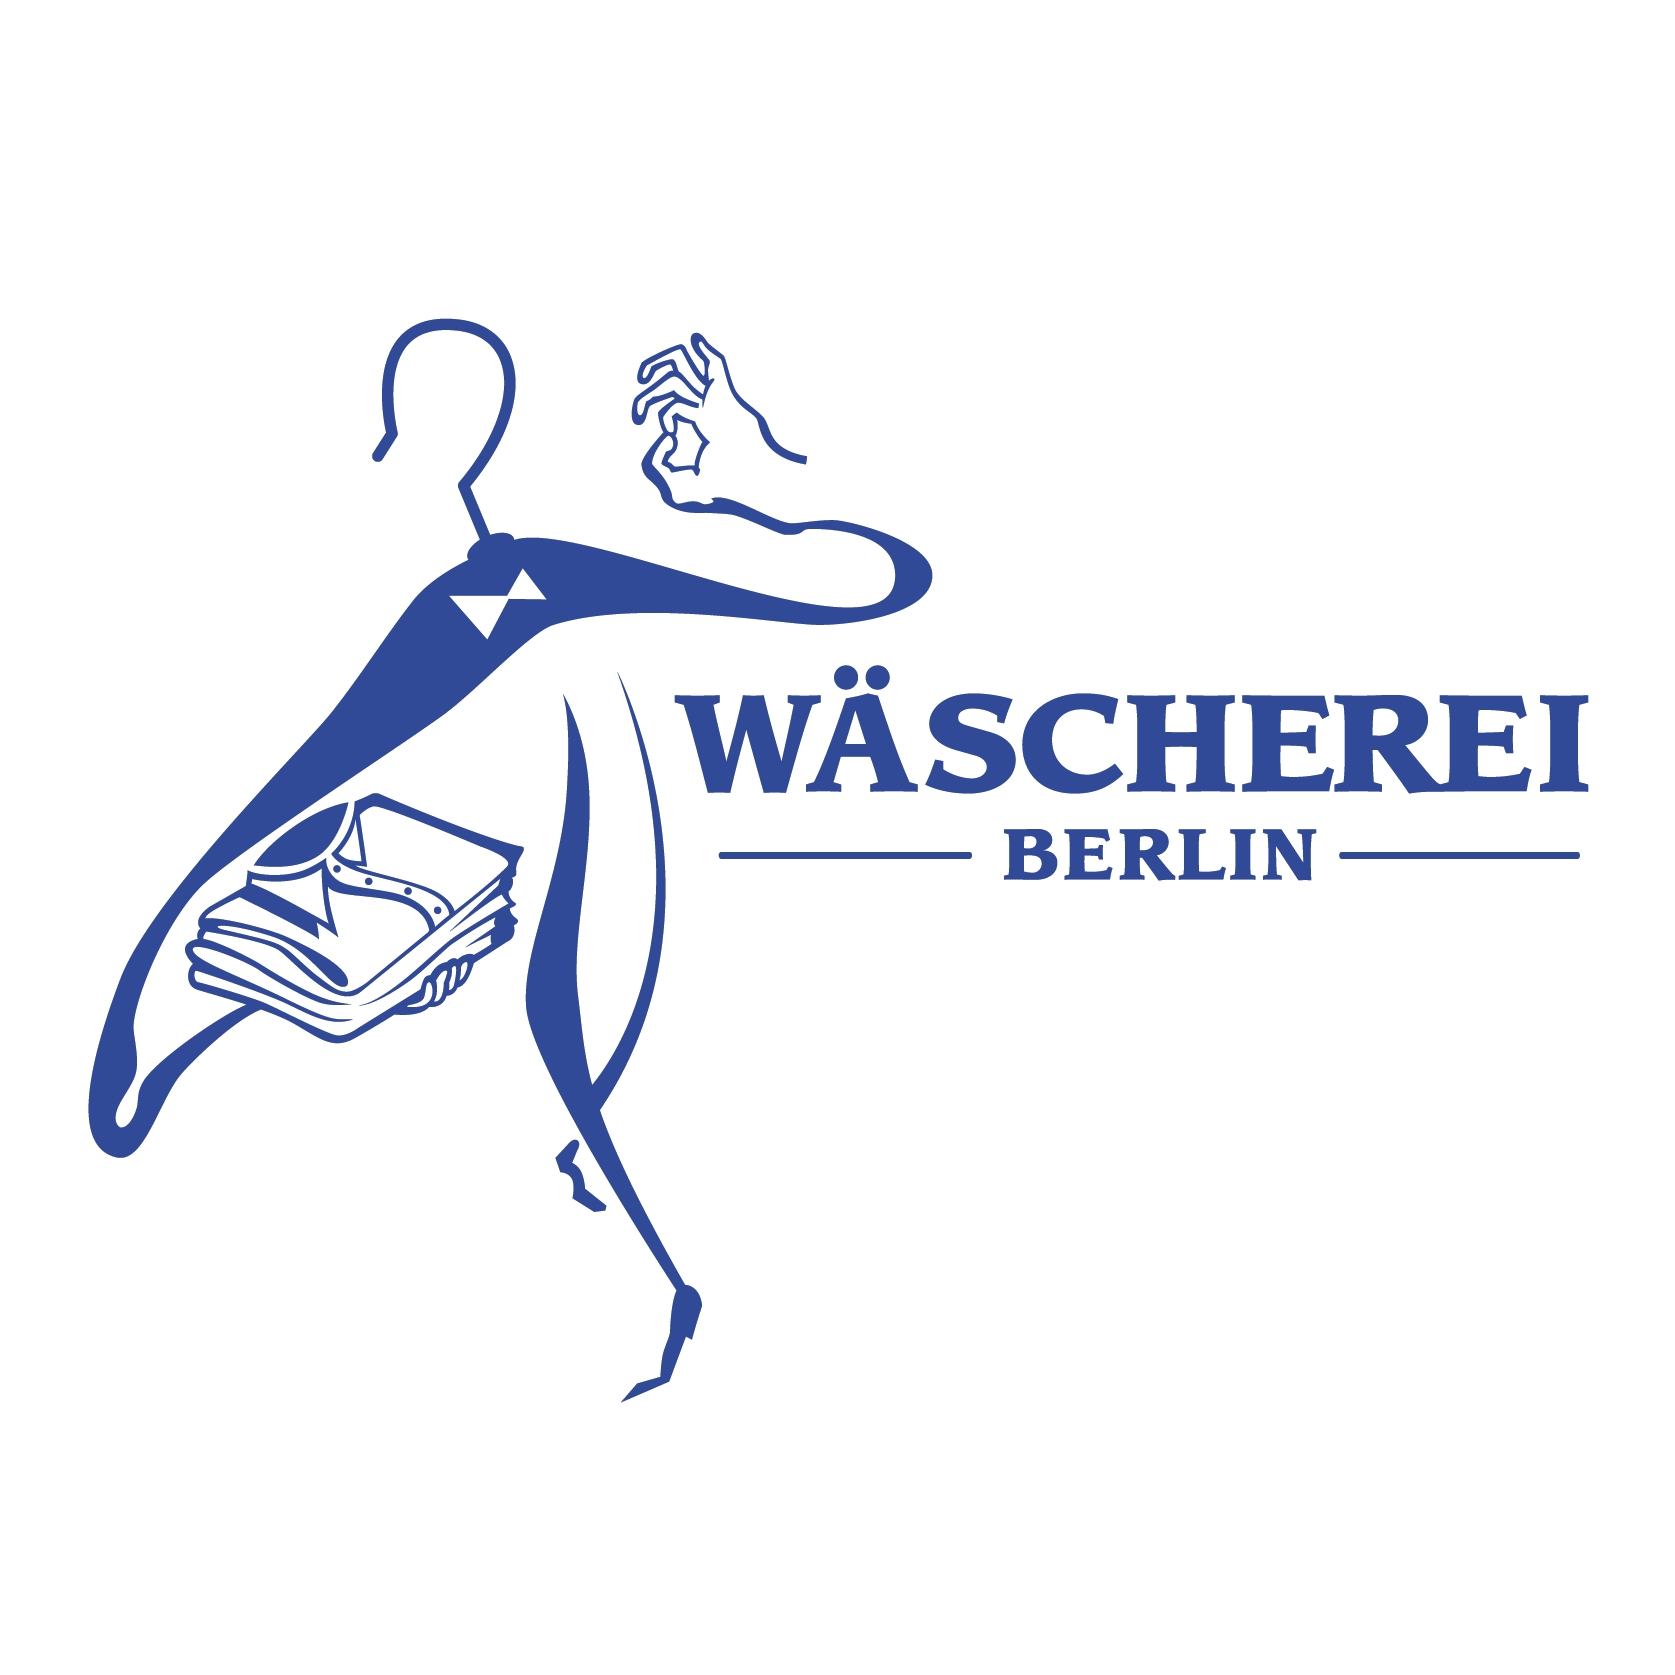 Wäscherei Berlin in Berlin - Logo